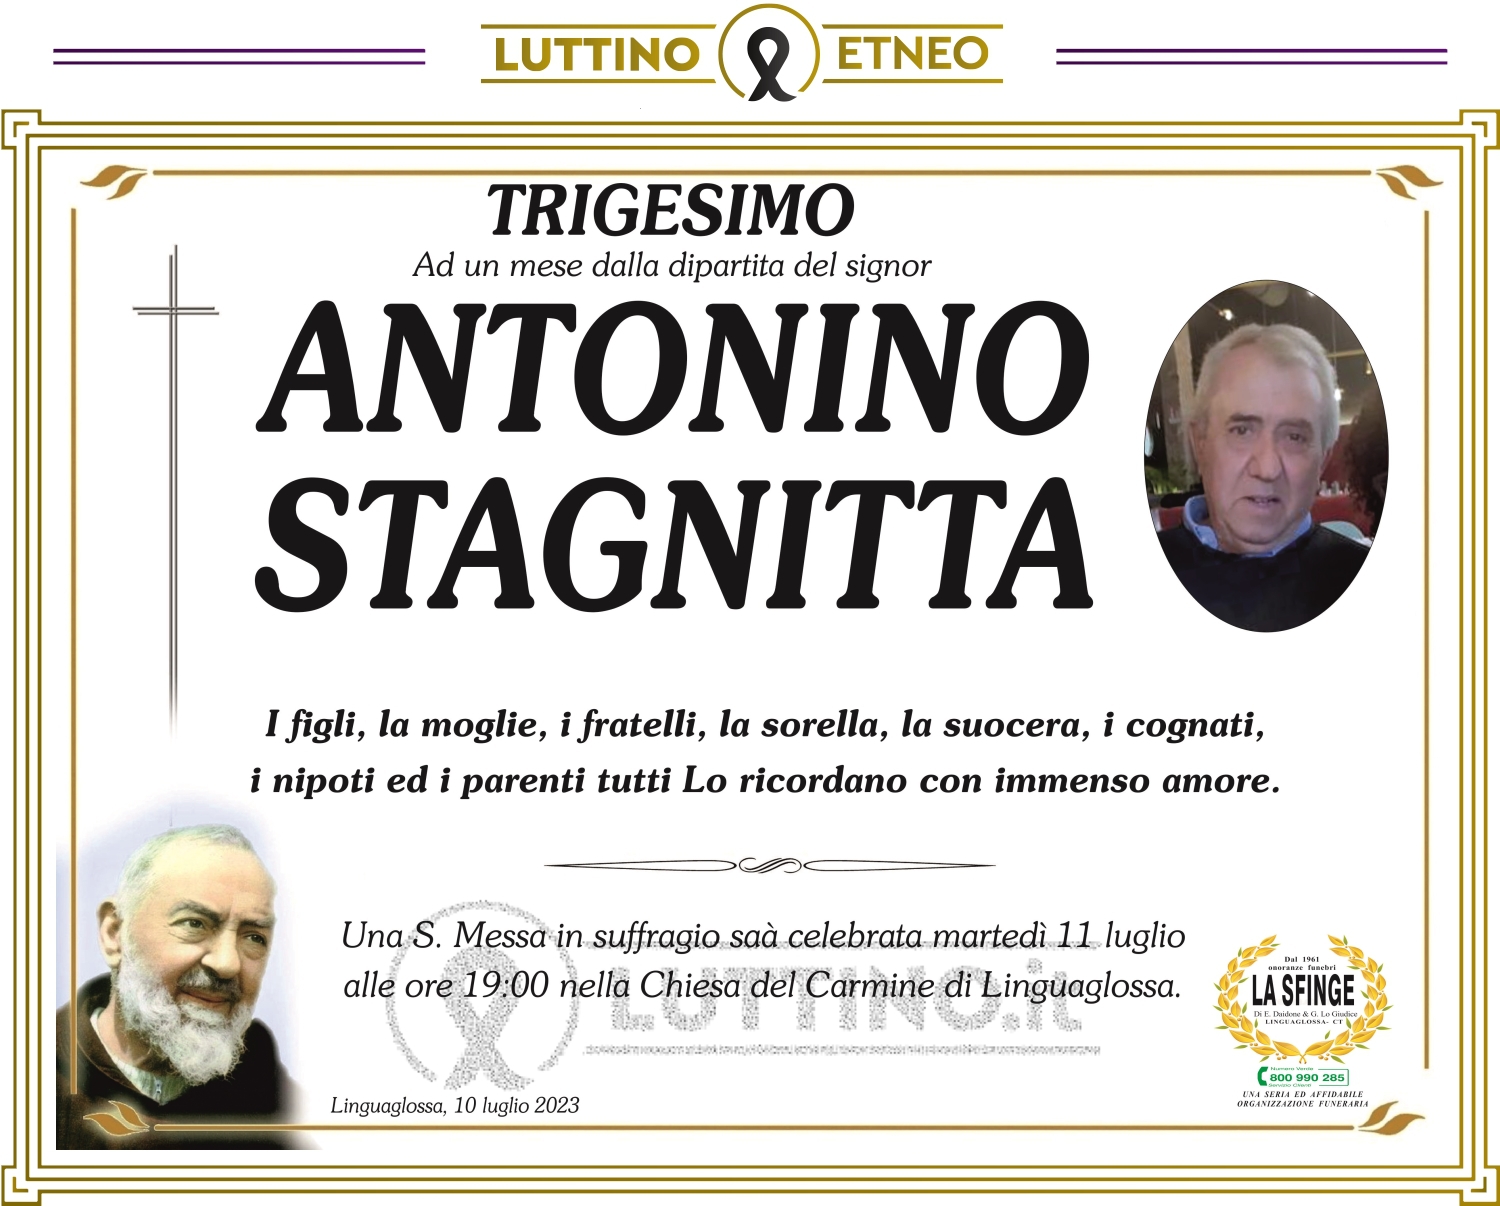 Antonino Stagnitta